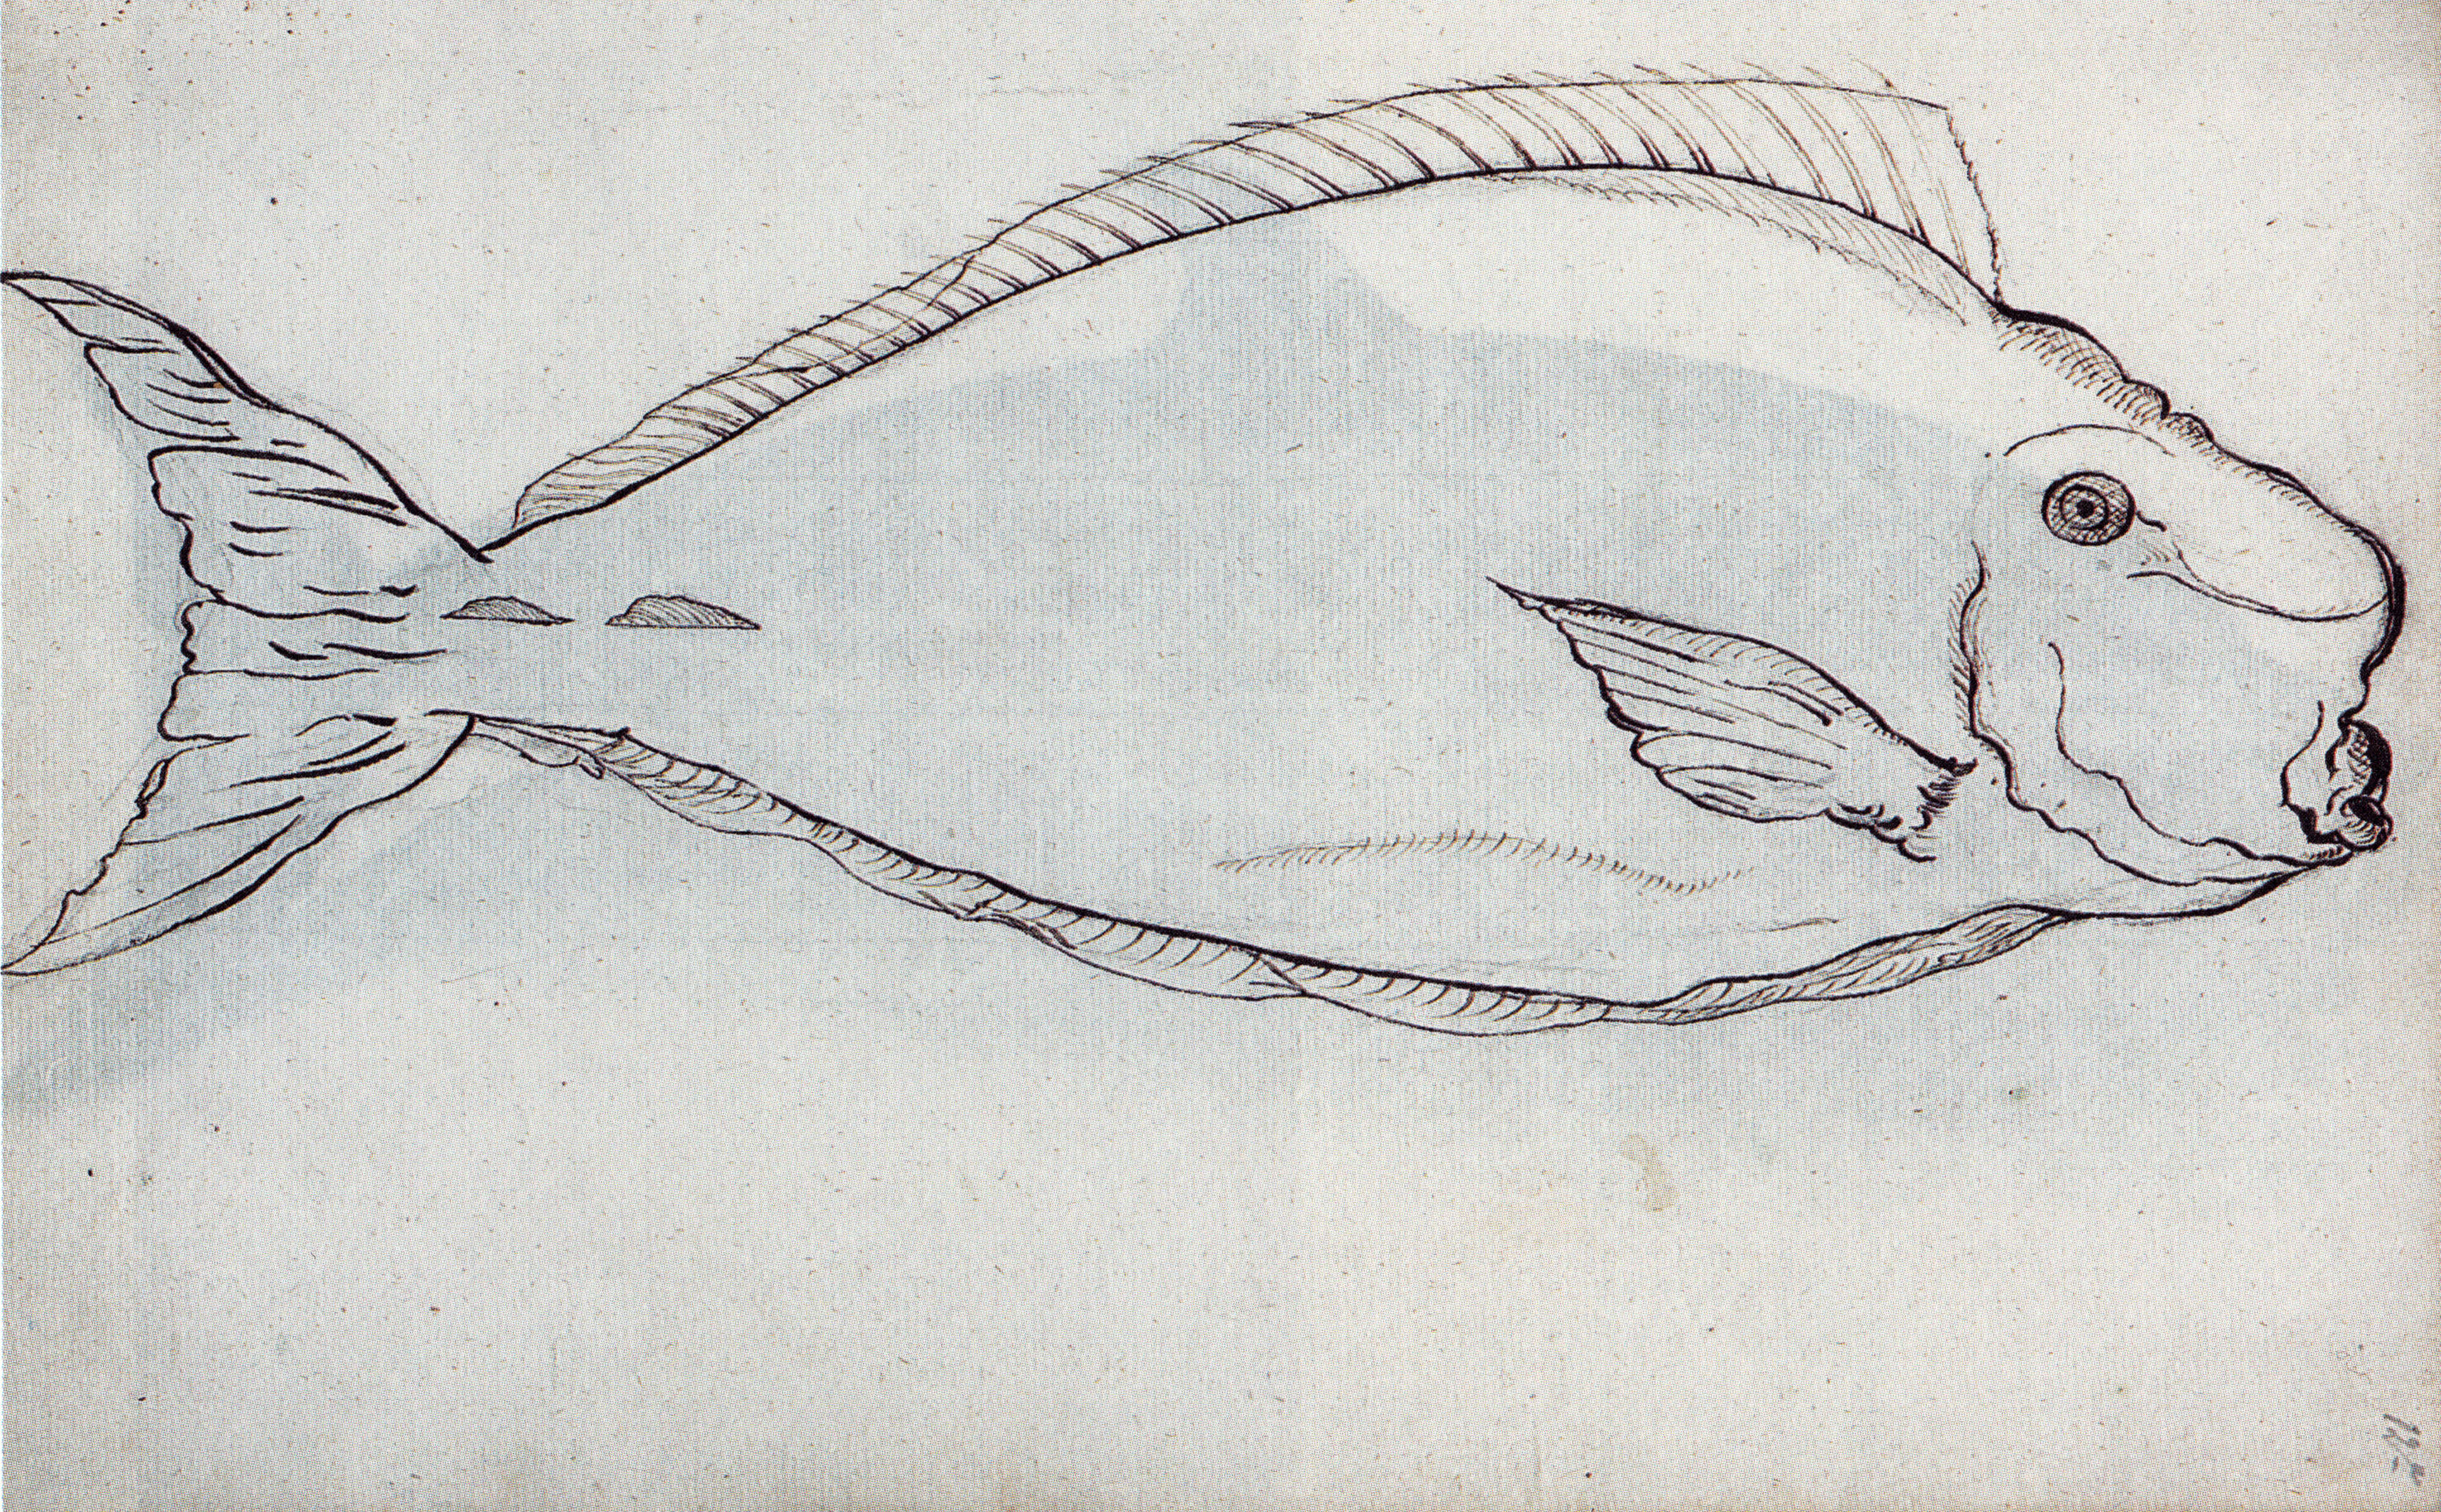 Image of Humpnose Unicornfish